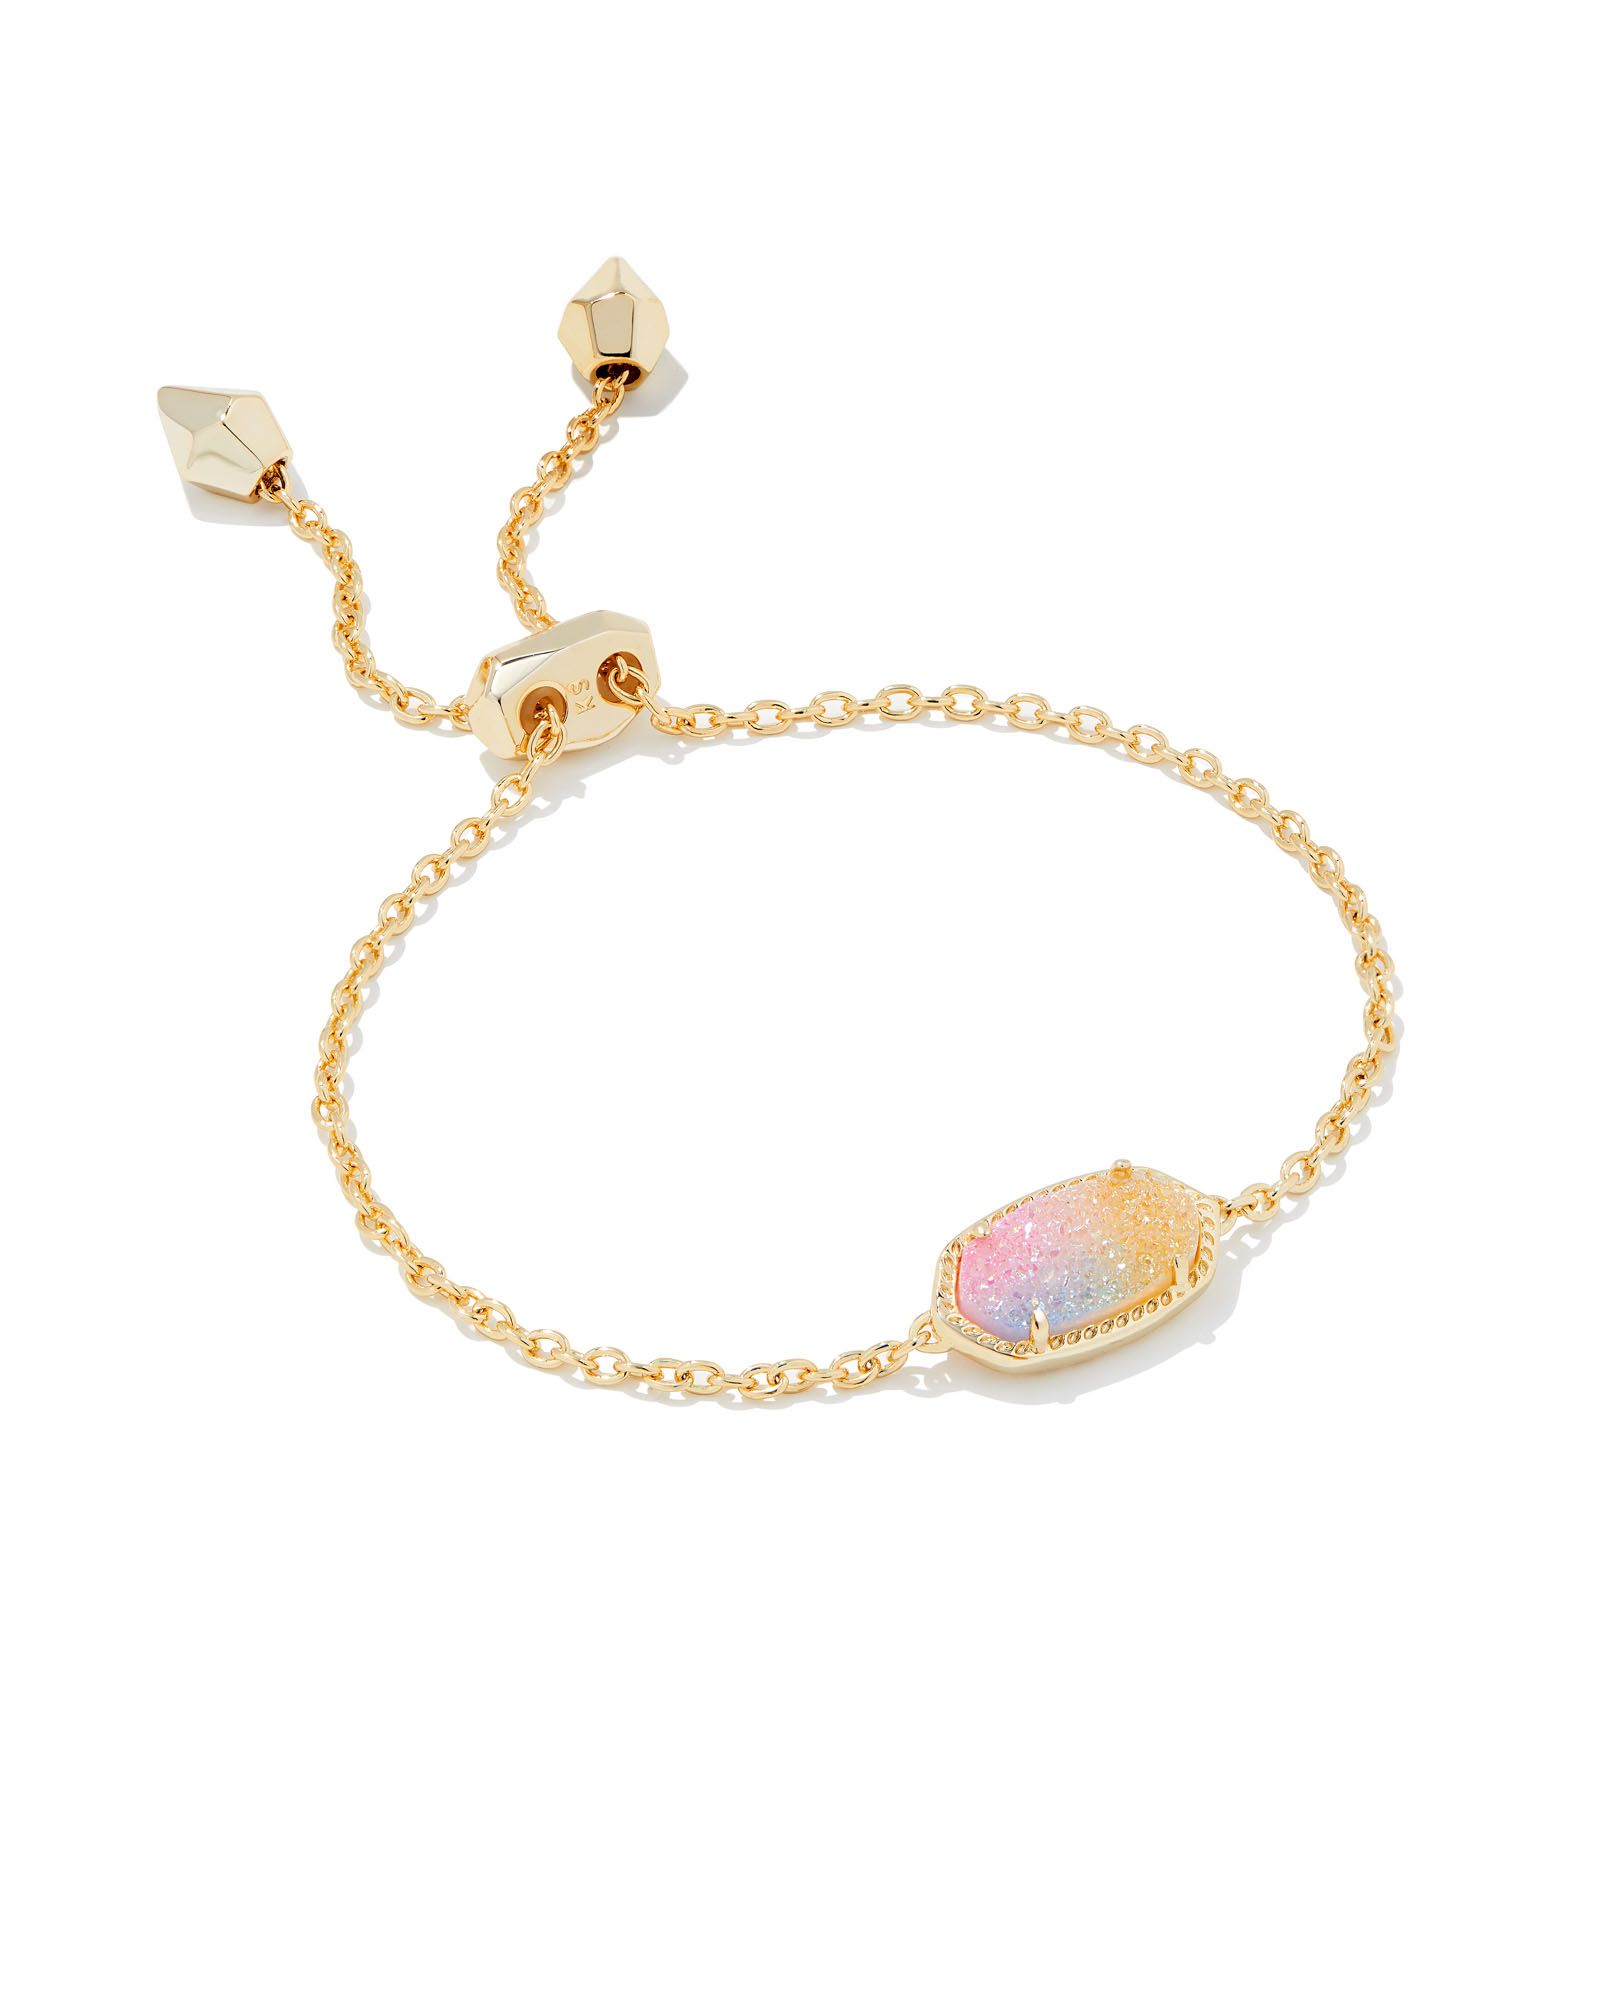 Elaina Gold Delicate Chain Bracelet in Pink Watercolor Drusy | Kendra Scott | Kendra Scott